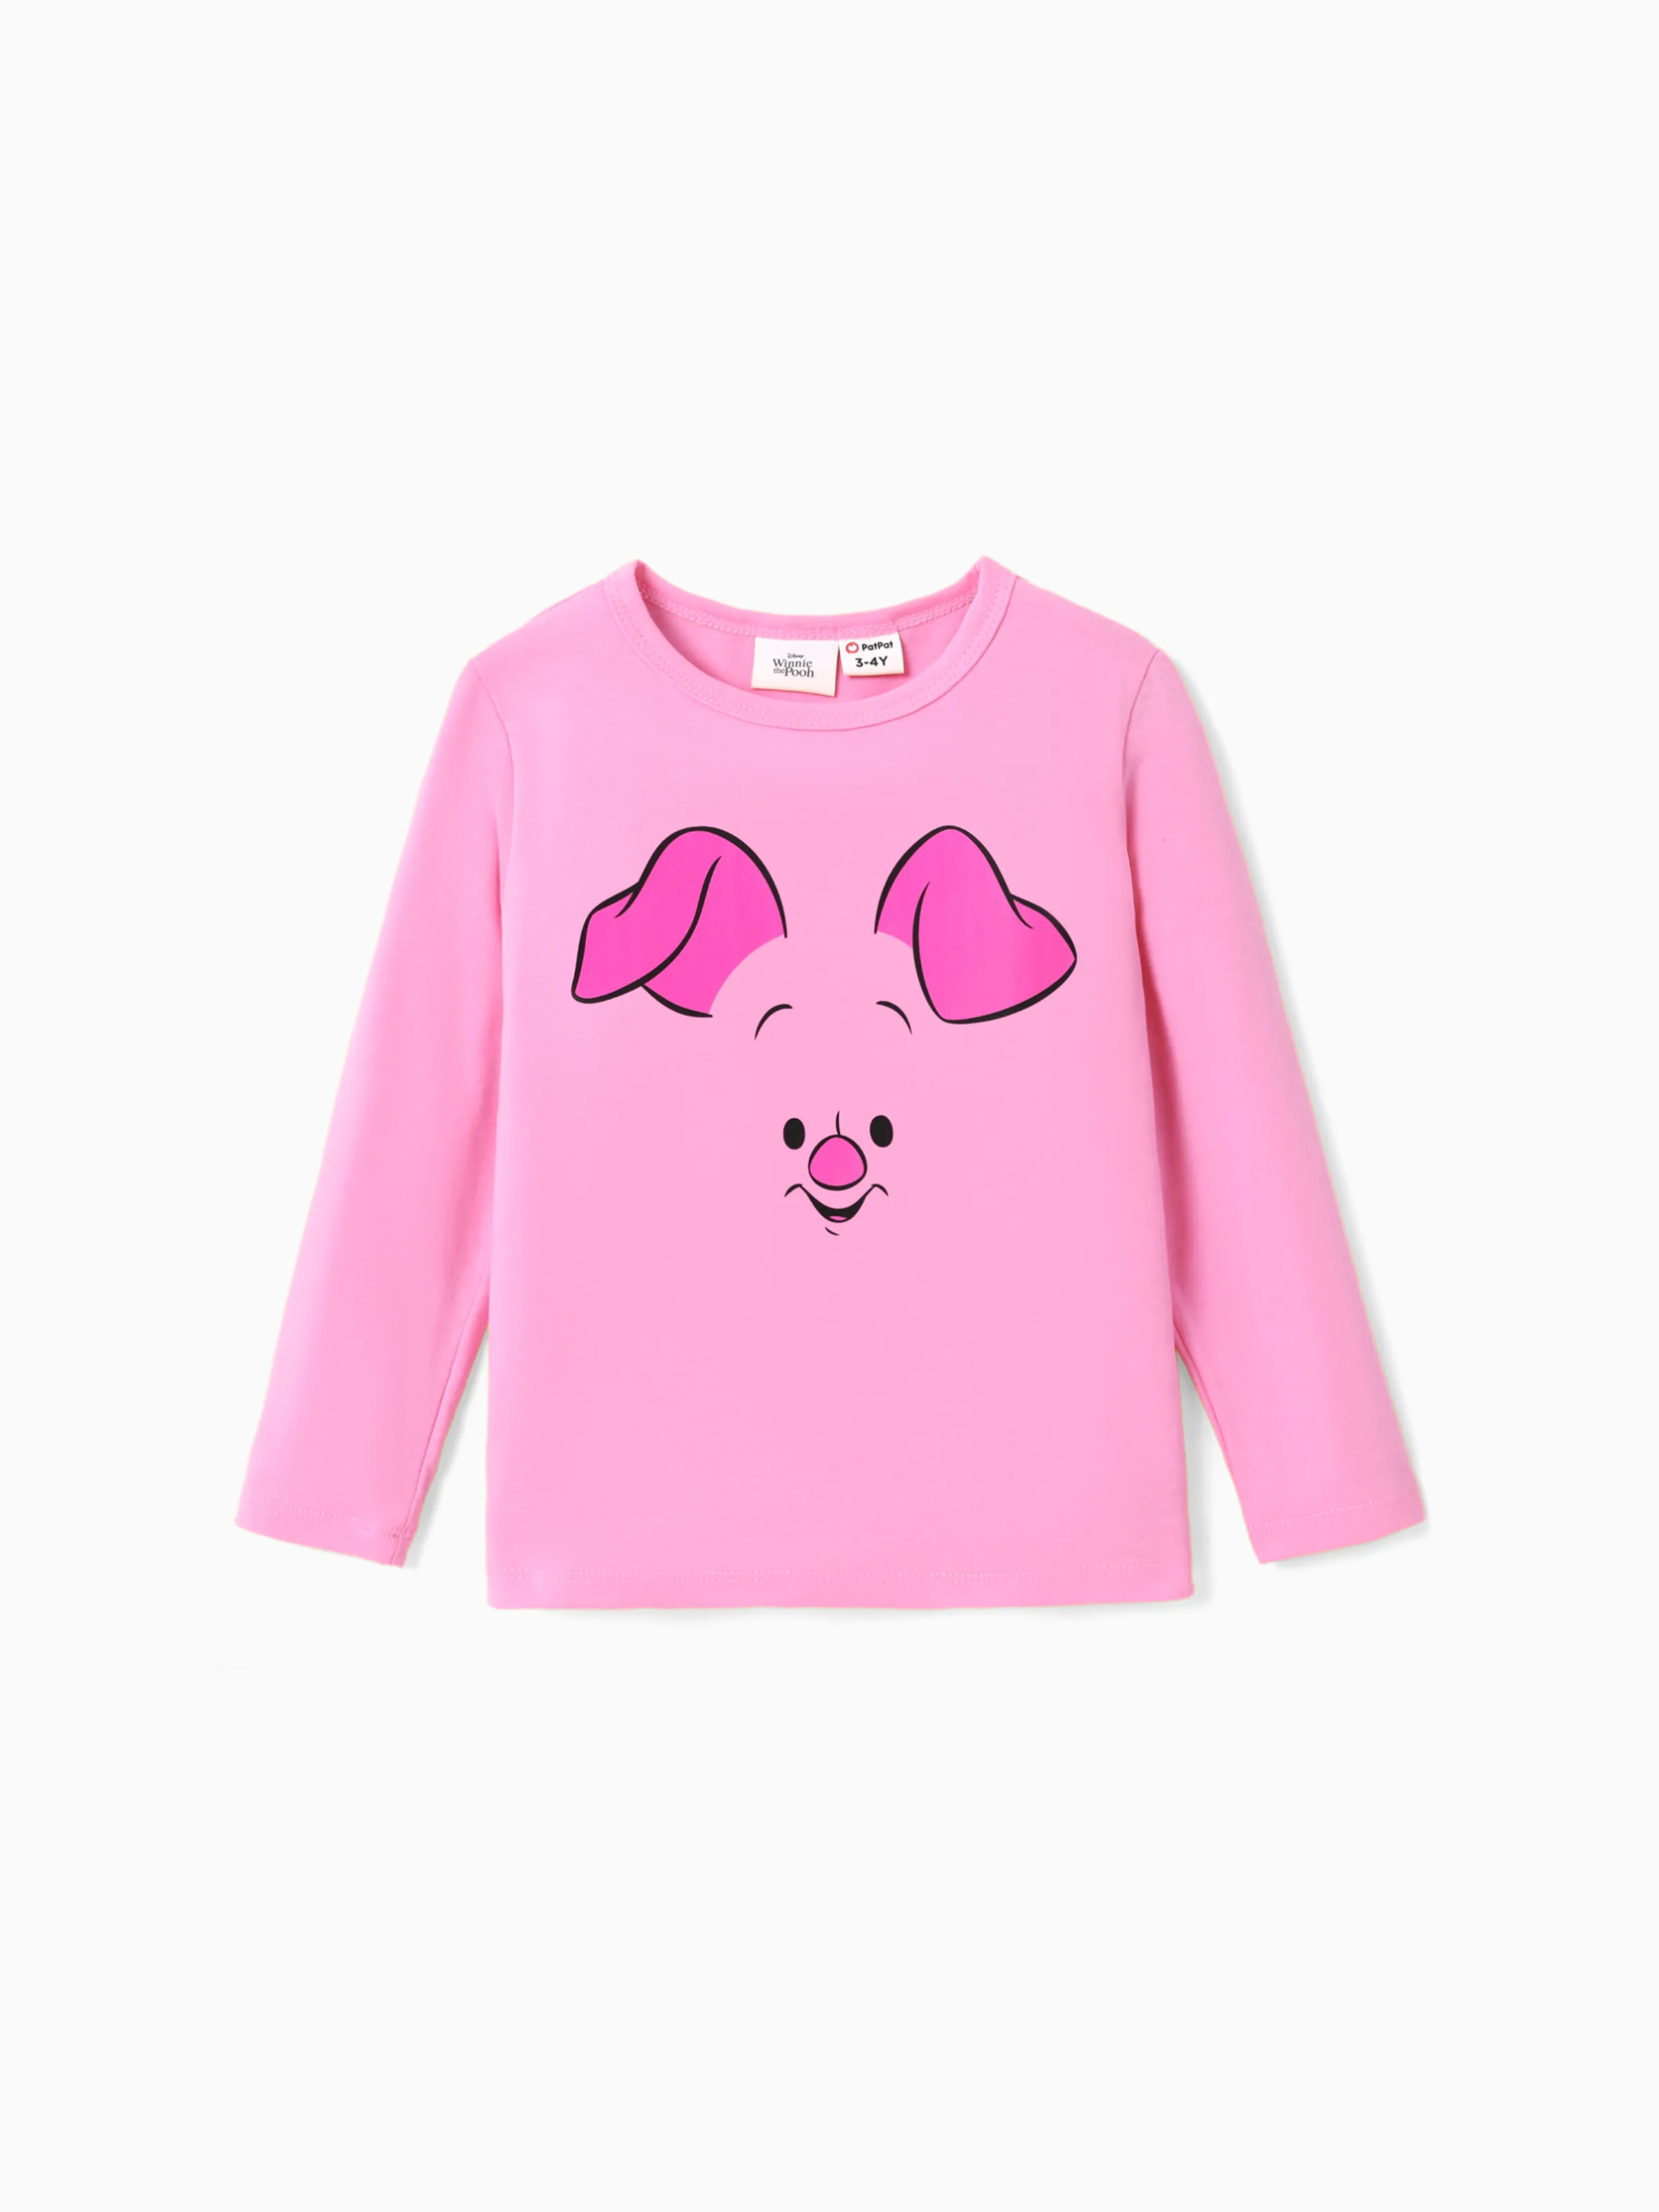 

Disney Winnie the Pooh Toddler Boys/Girls Cute Characters Emoji Long Sleeve T-Shirt